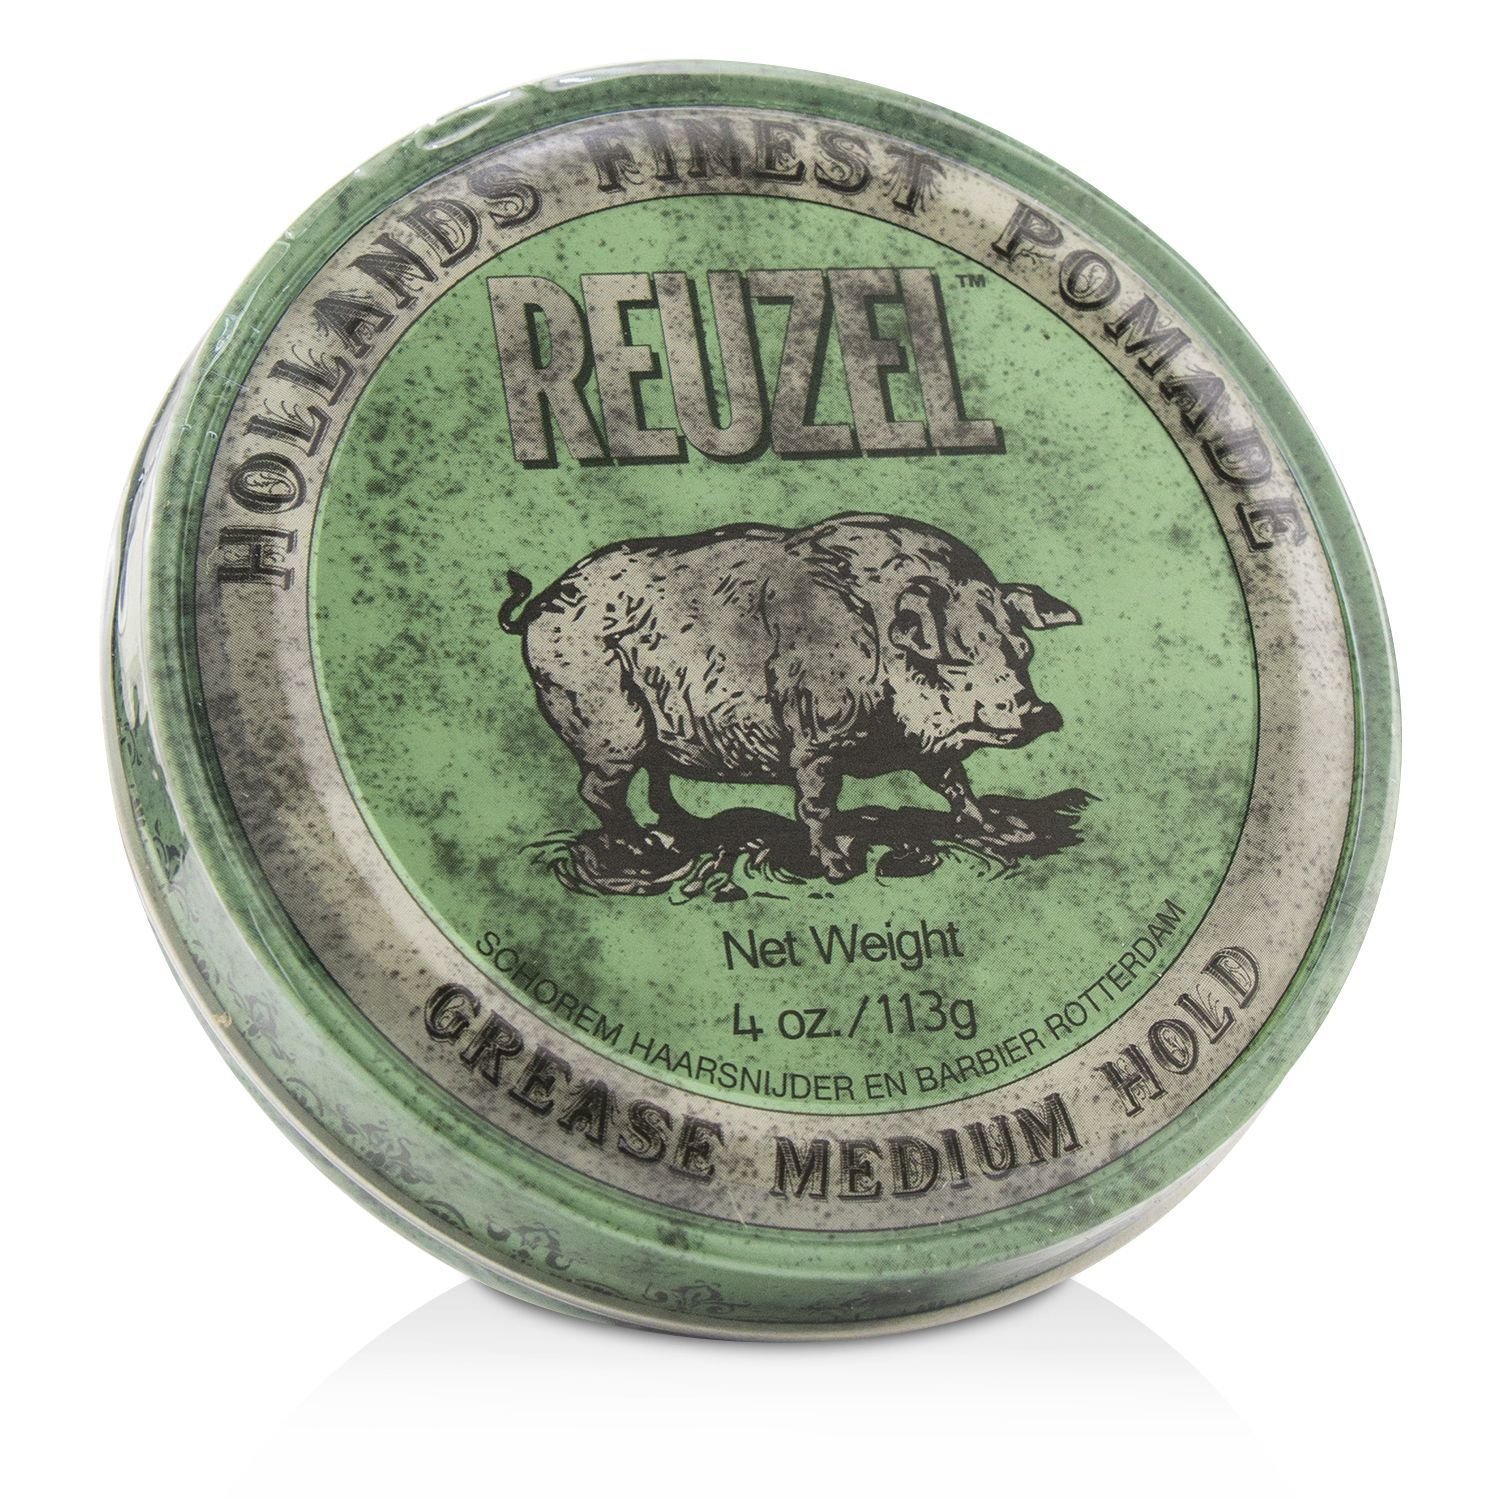 Reuzel - 綠豬油性髮油 Green Pomade(油脂中等定型)